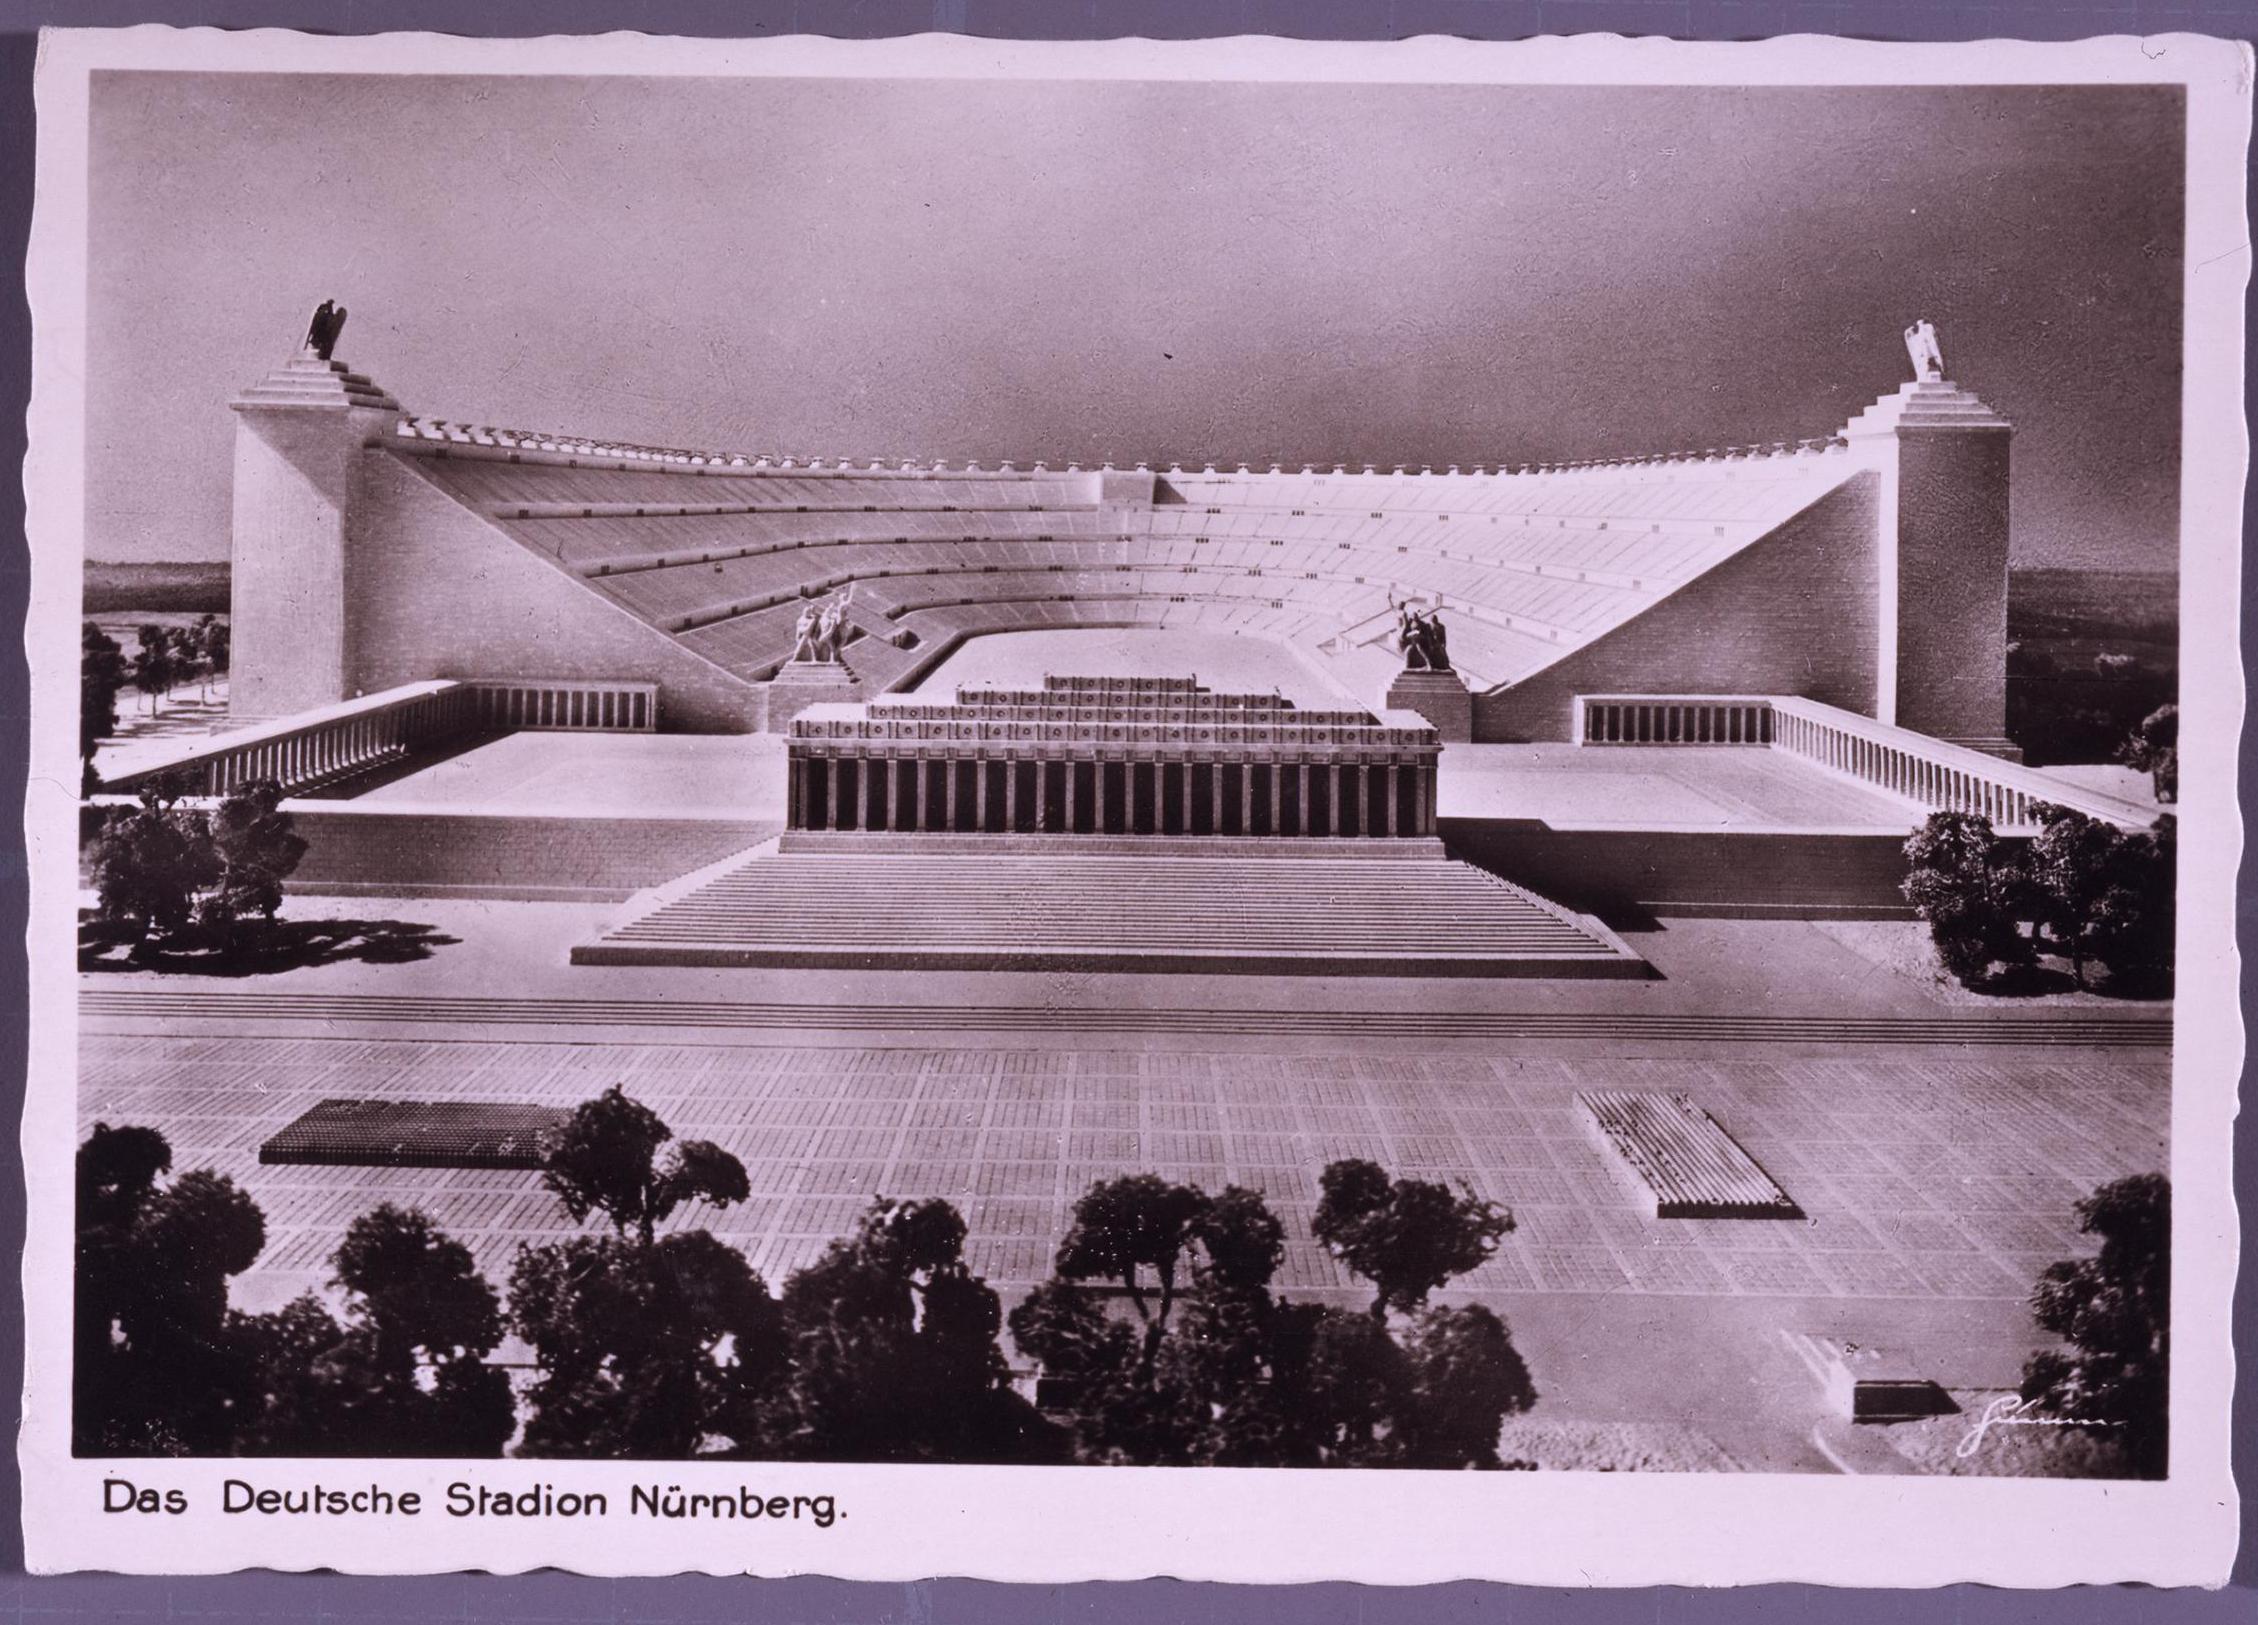 Exponat: Postkarte: Modell des Deutschen Stadions in Nürnberg, um 1937